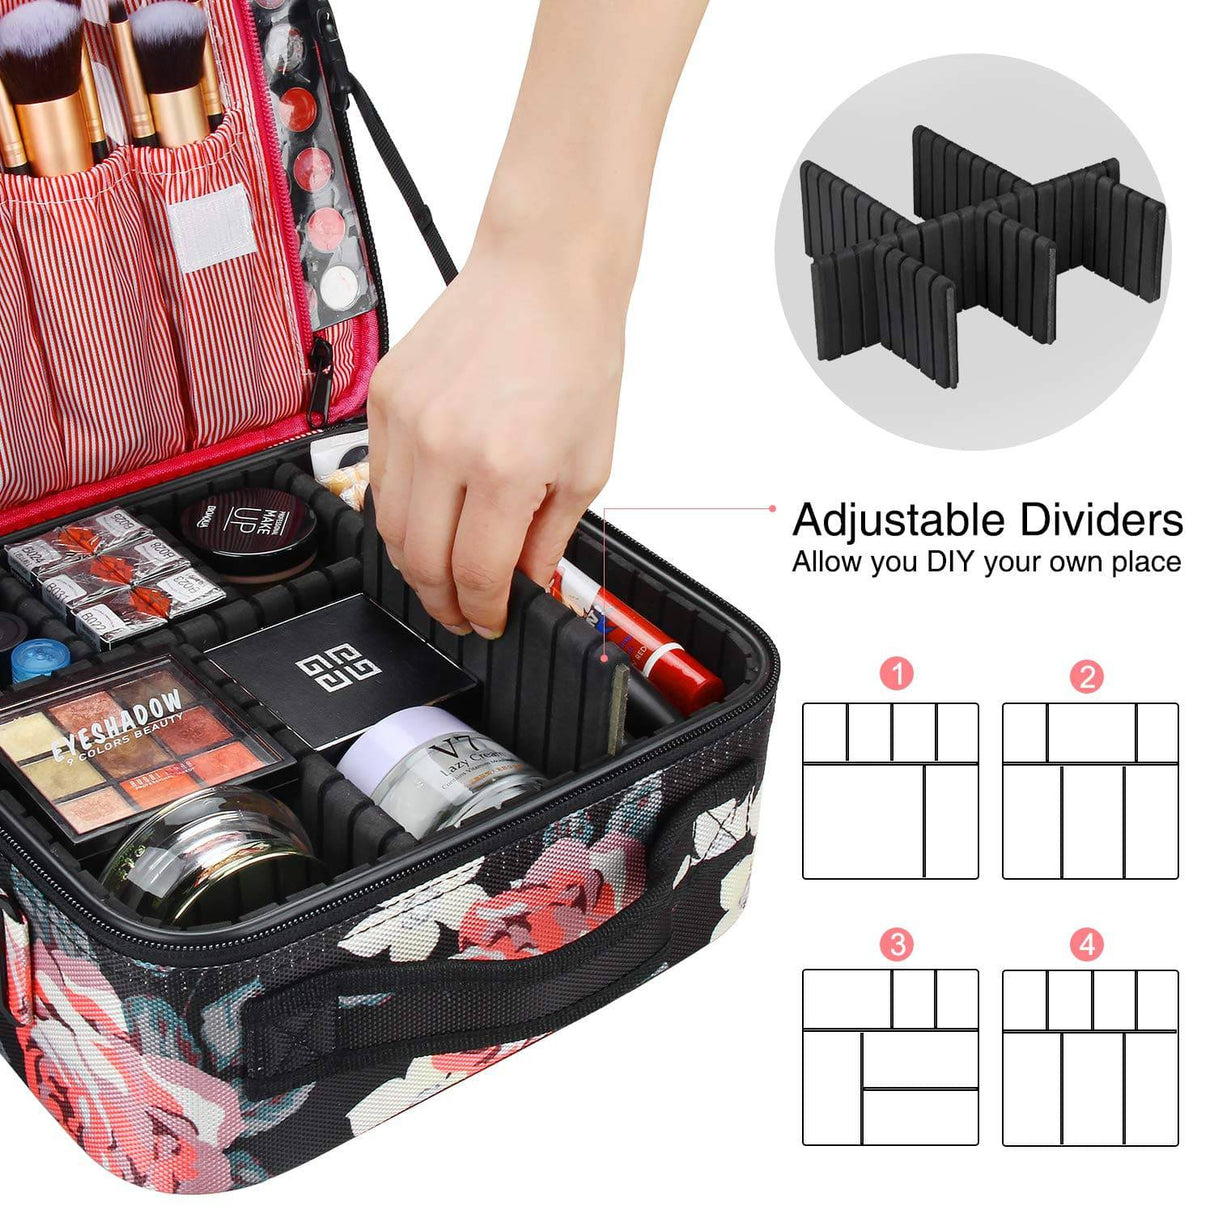 Caja organizadora de maquillaje, caja de almacenamiento de